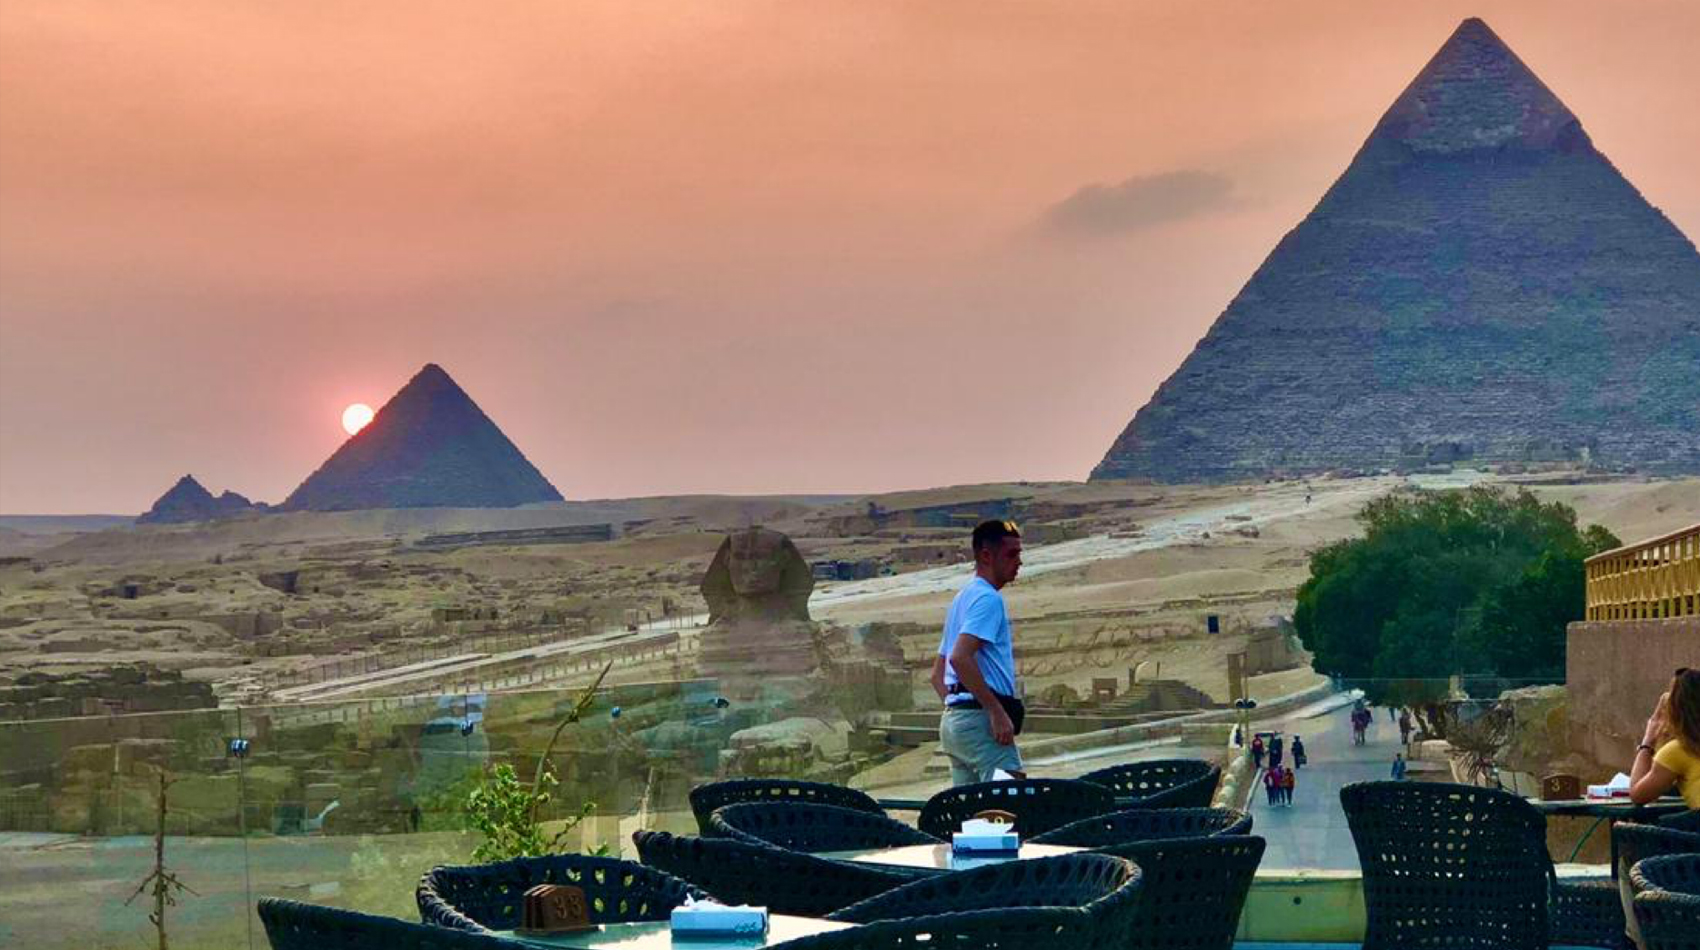 Pyramids Valley